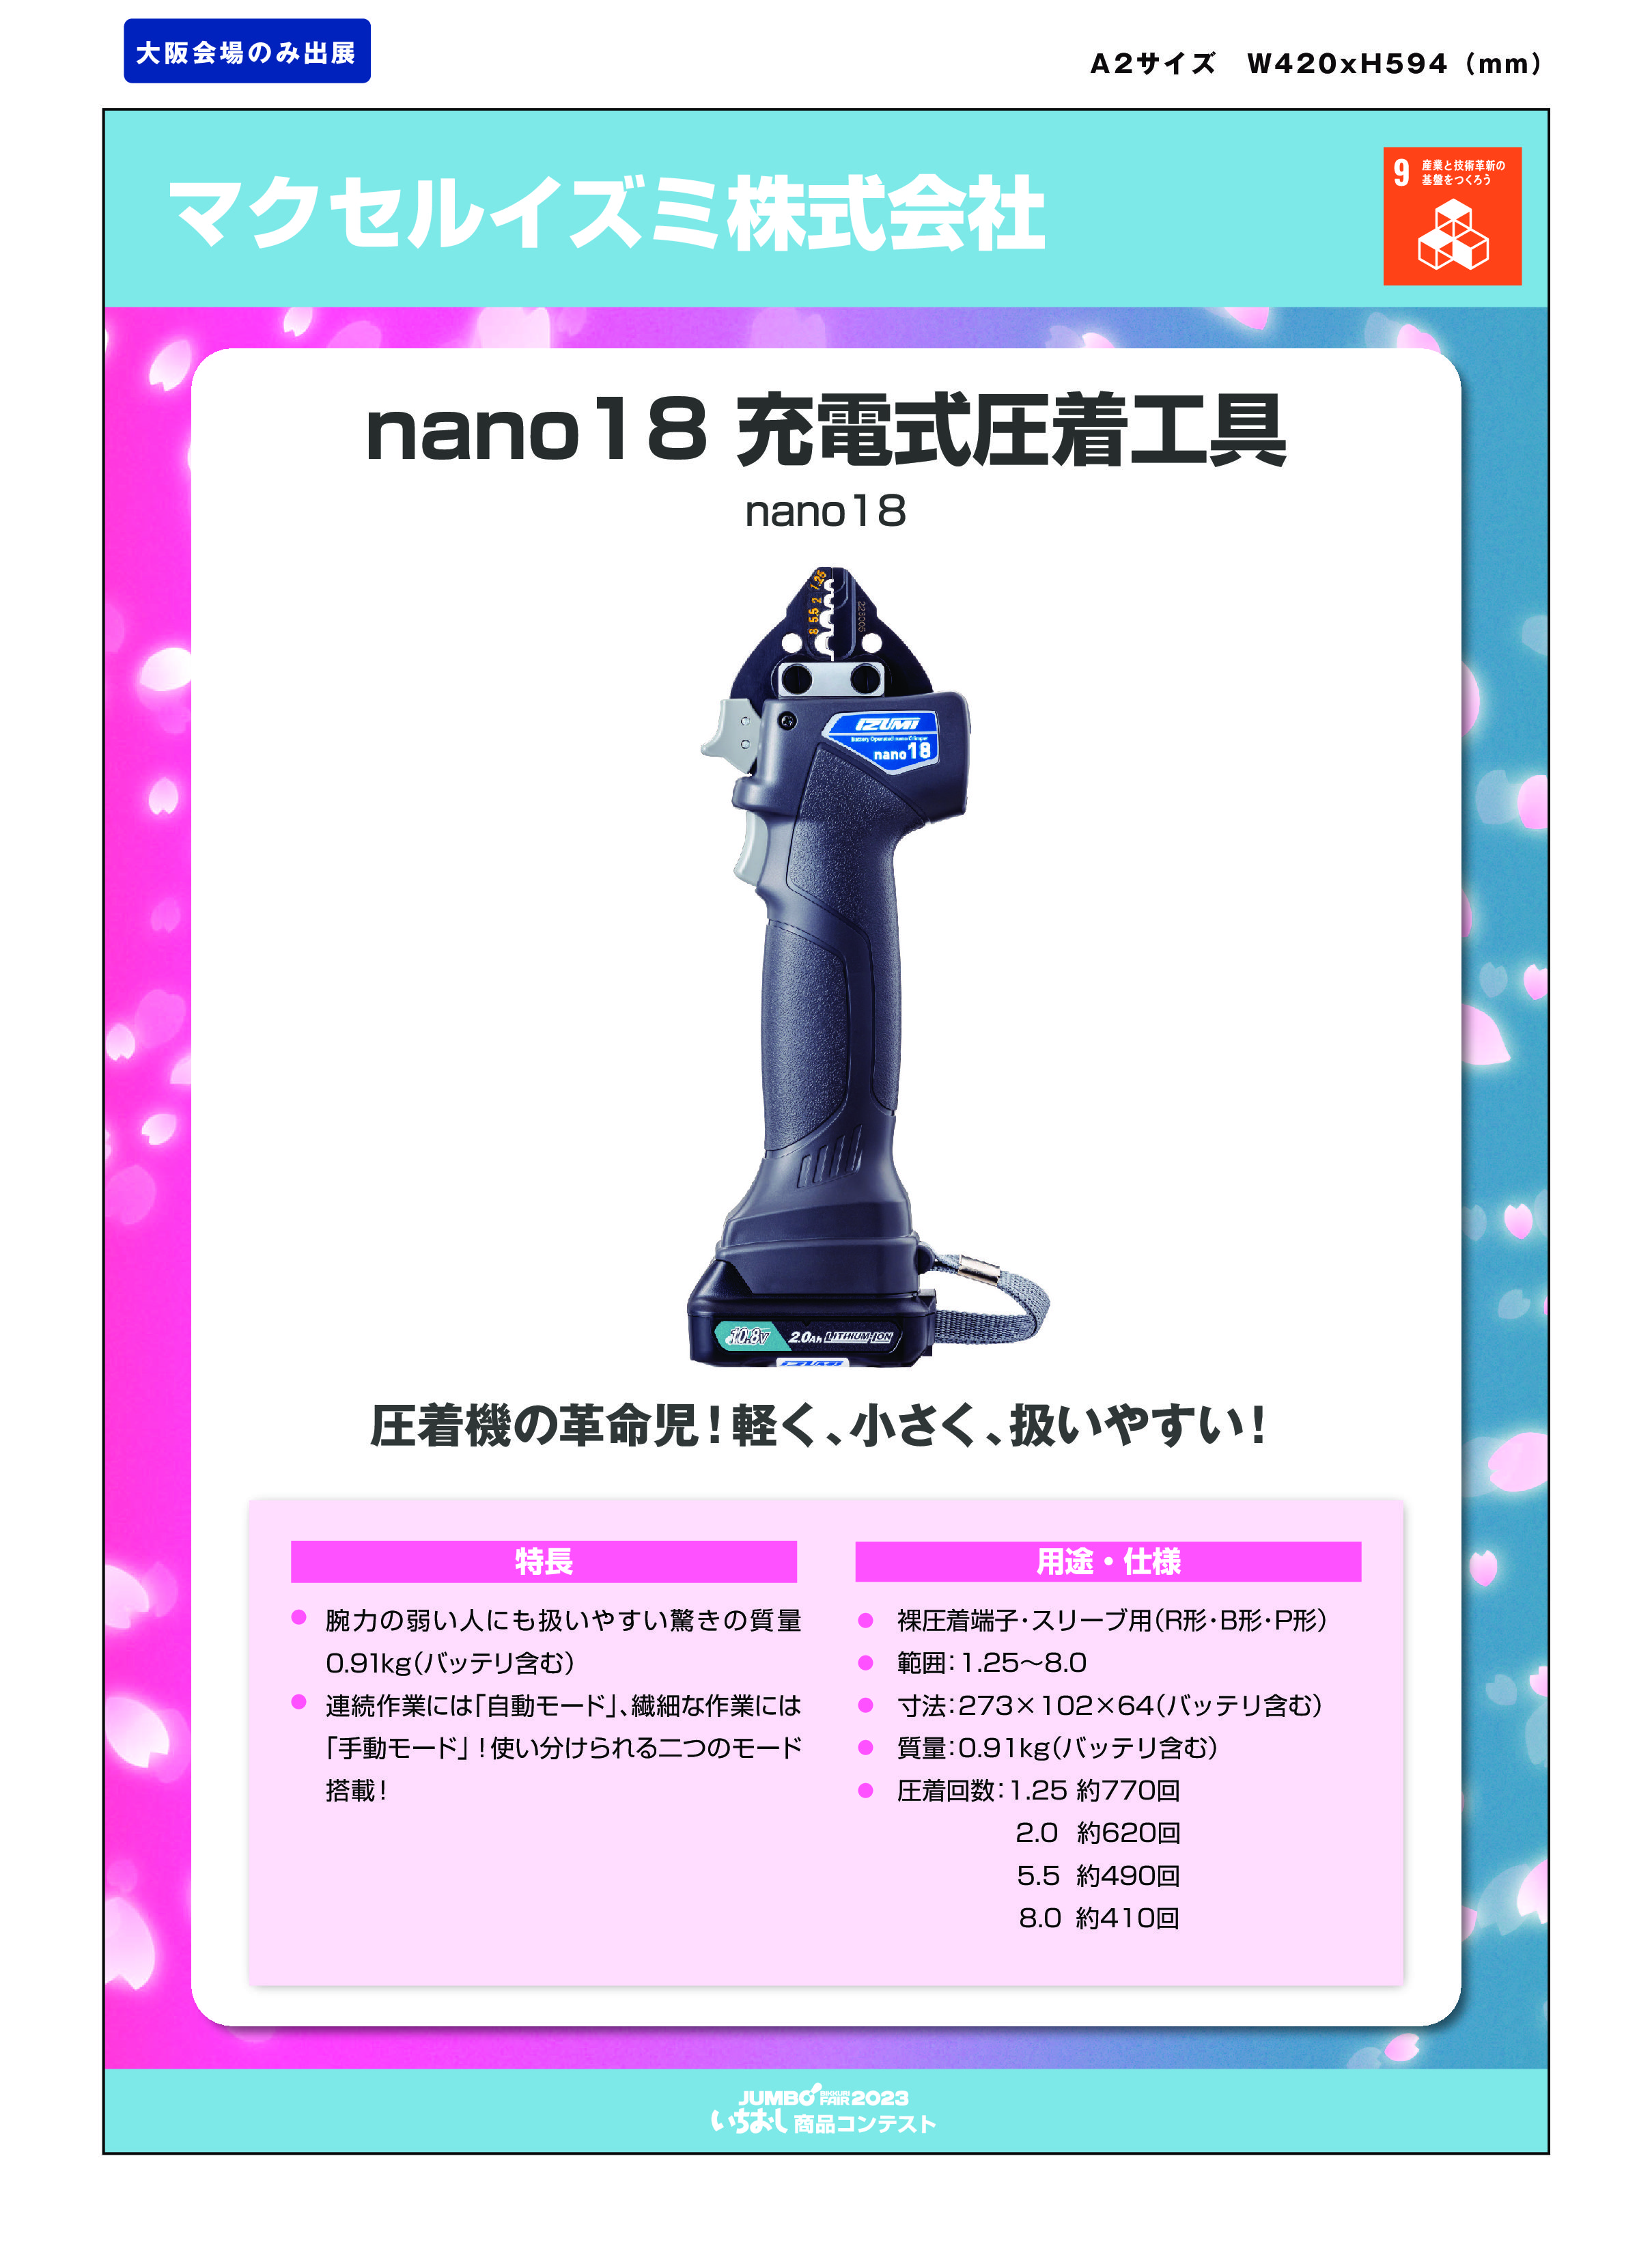 「nano 18 充電式圧着工具」マクセルイズミ株式会社の画像